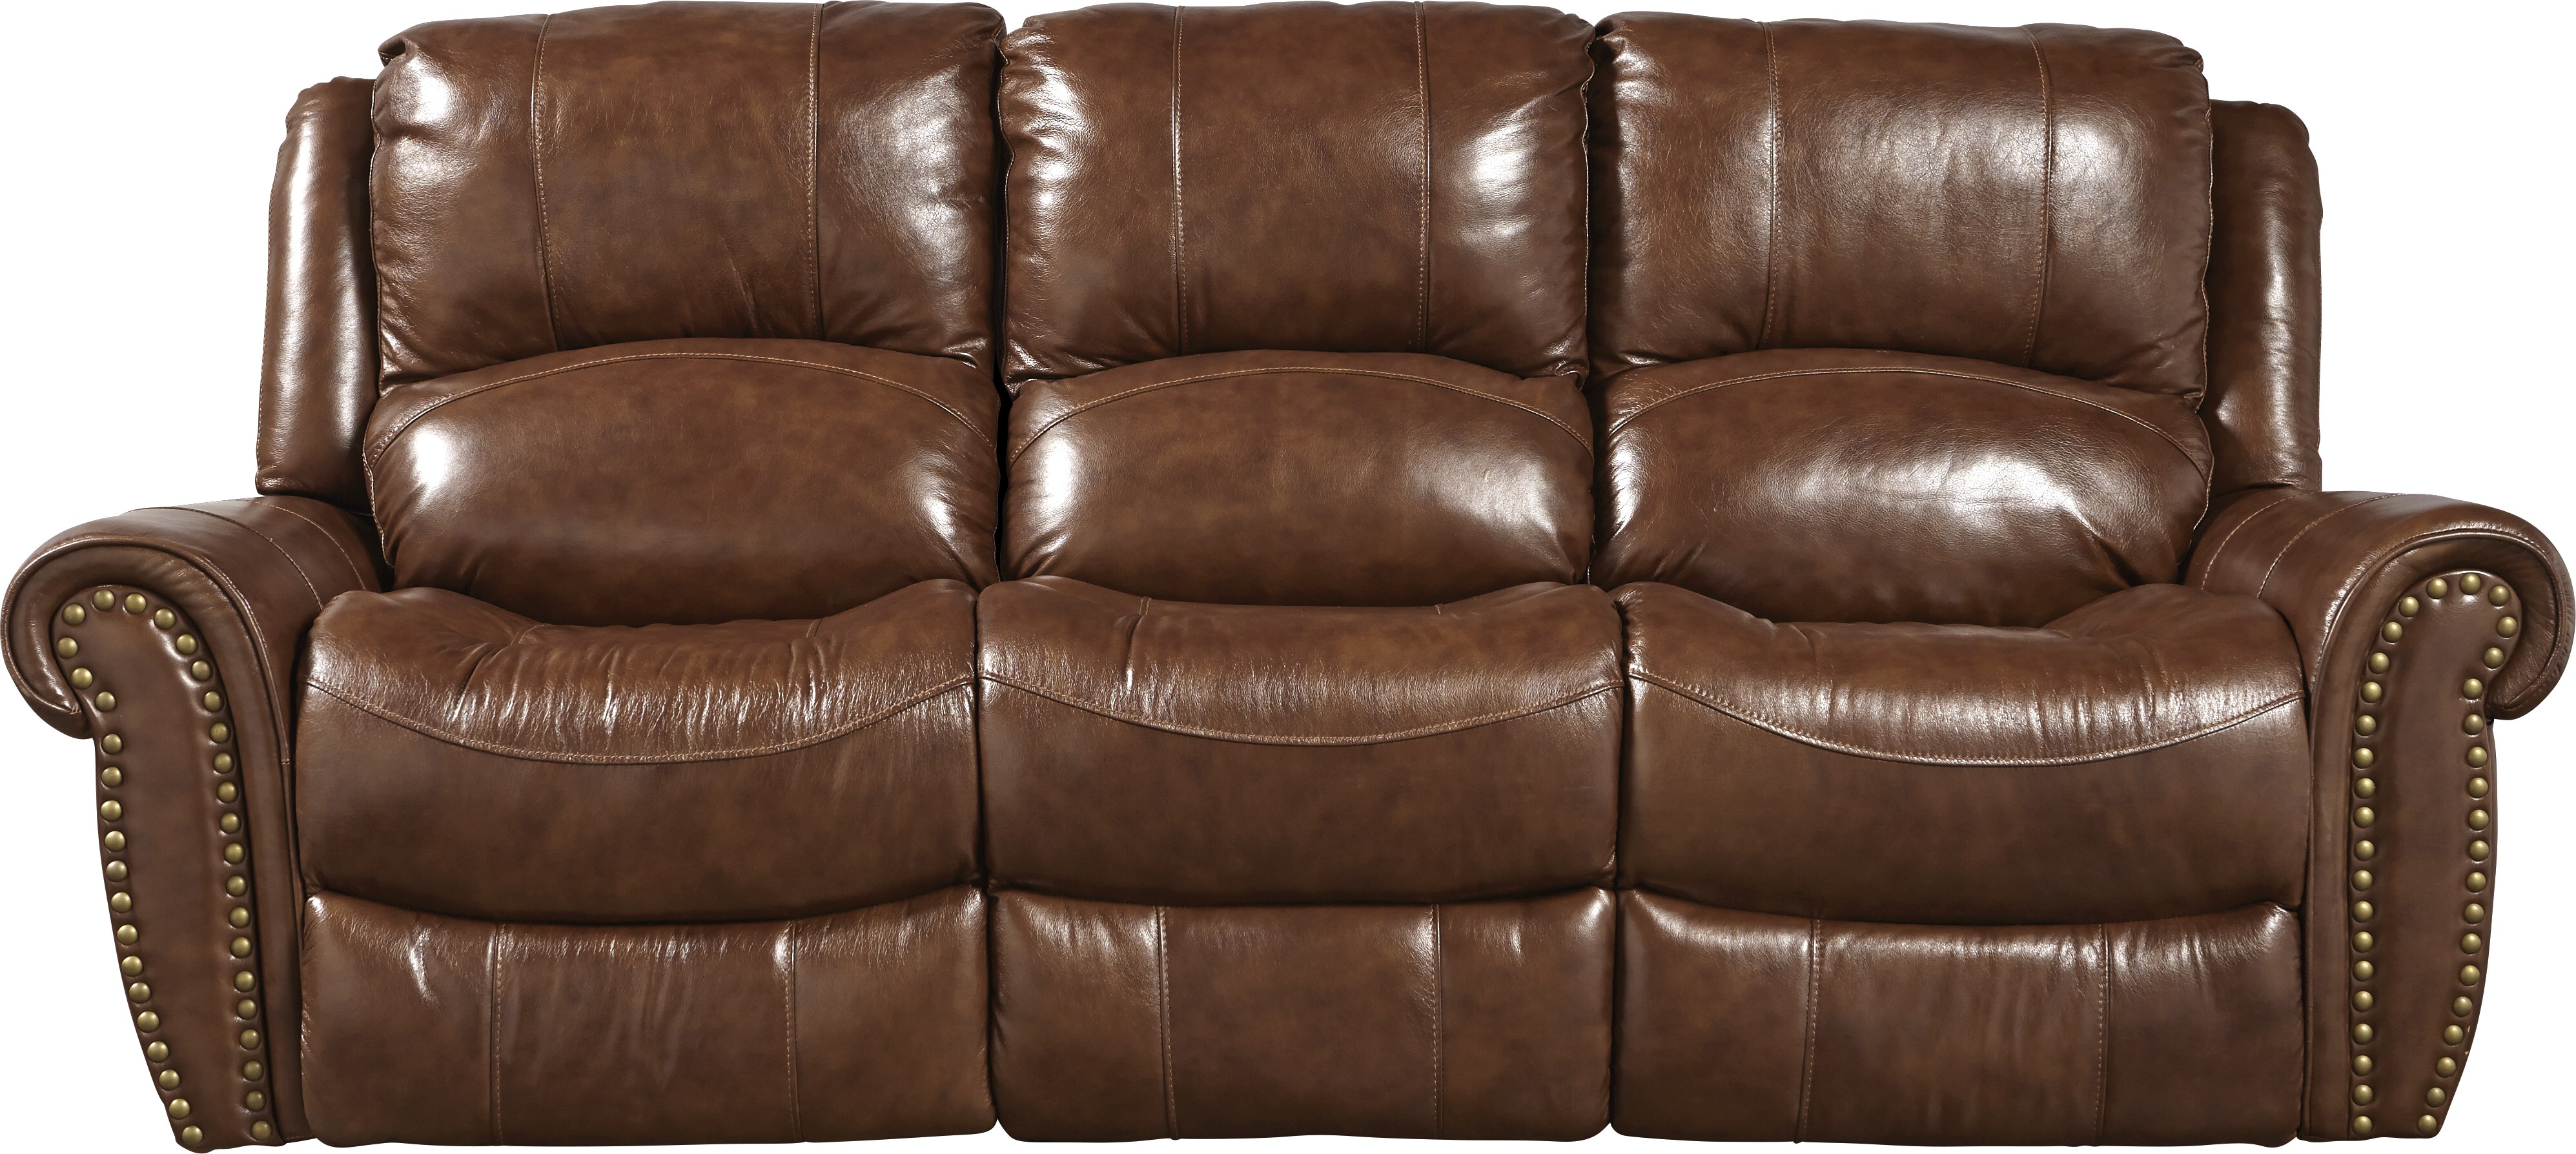 Abruzzo Brown Leather Reclining Sofa